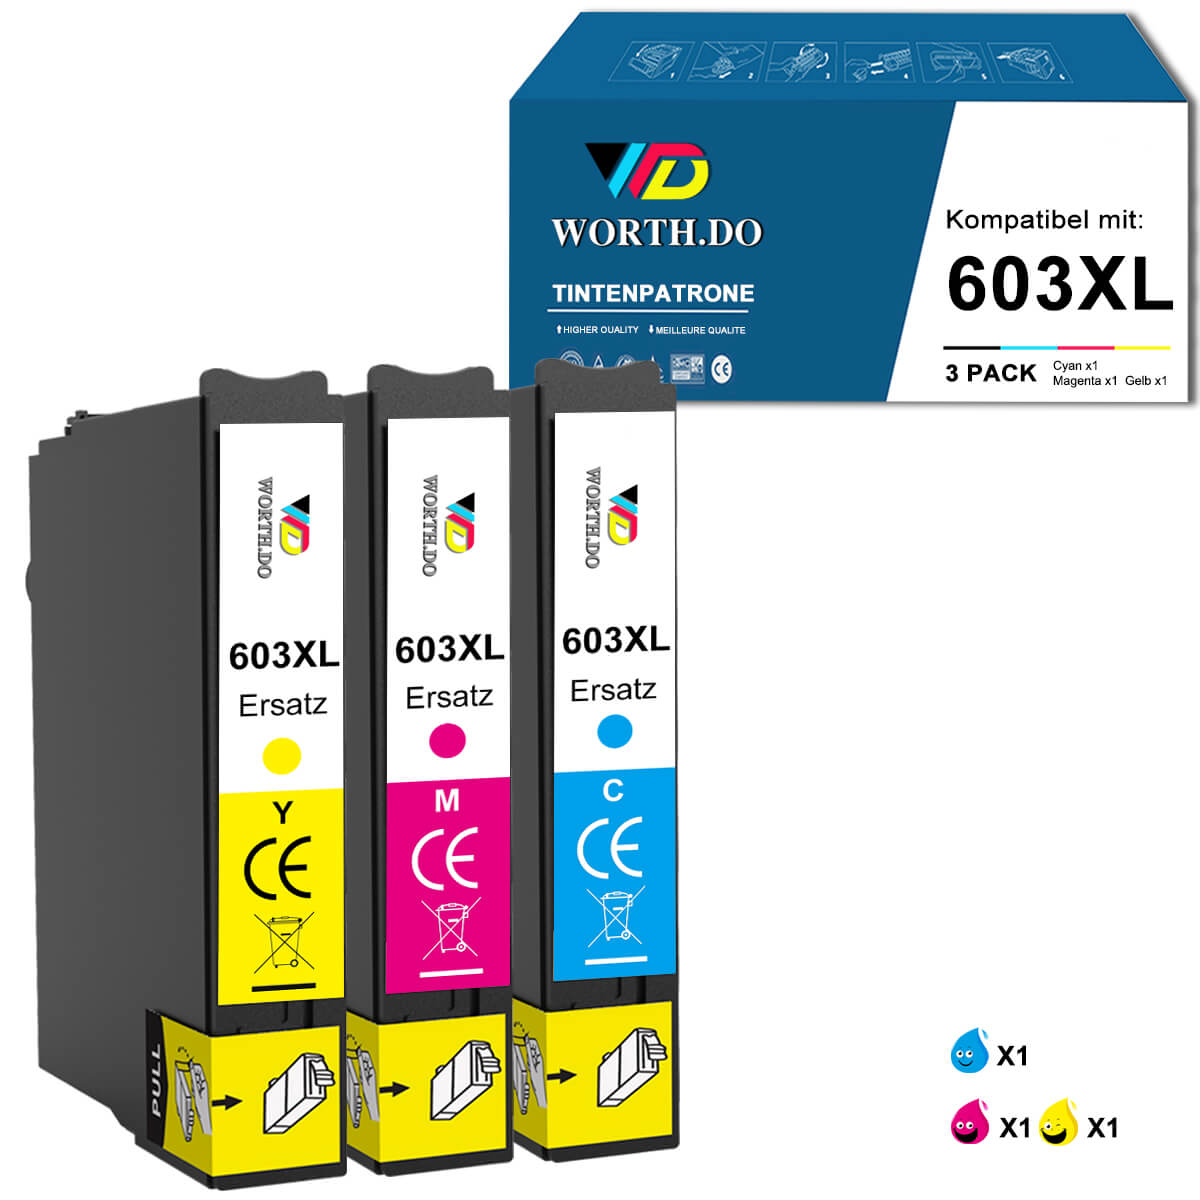    worthdo-kompatible-tintenpatronen-feur-epson-603xl-colorpack